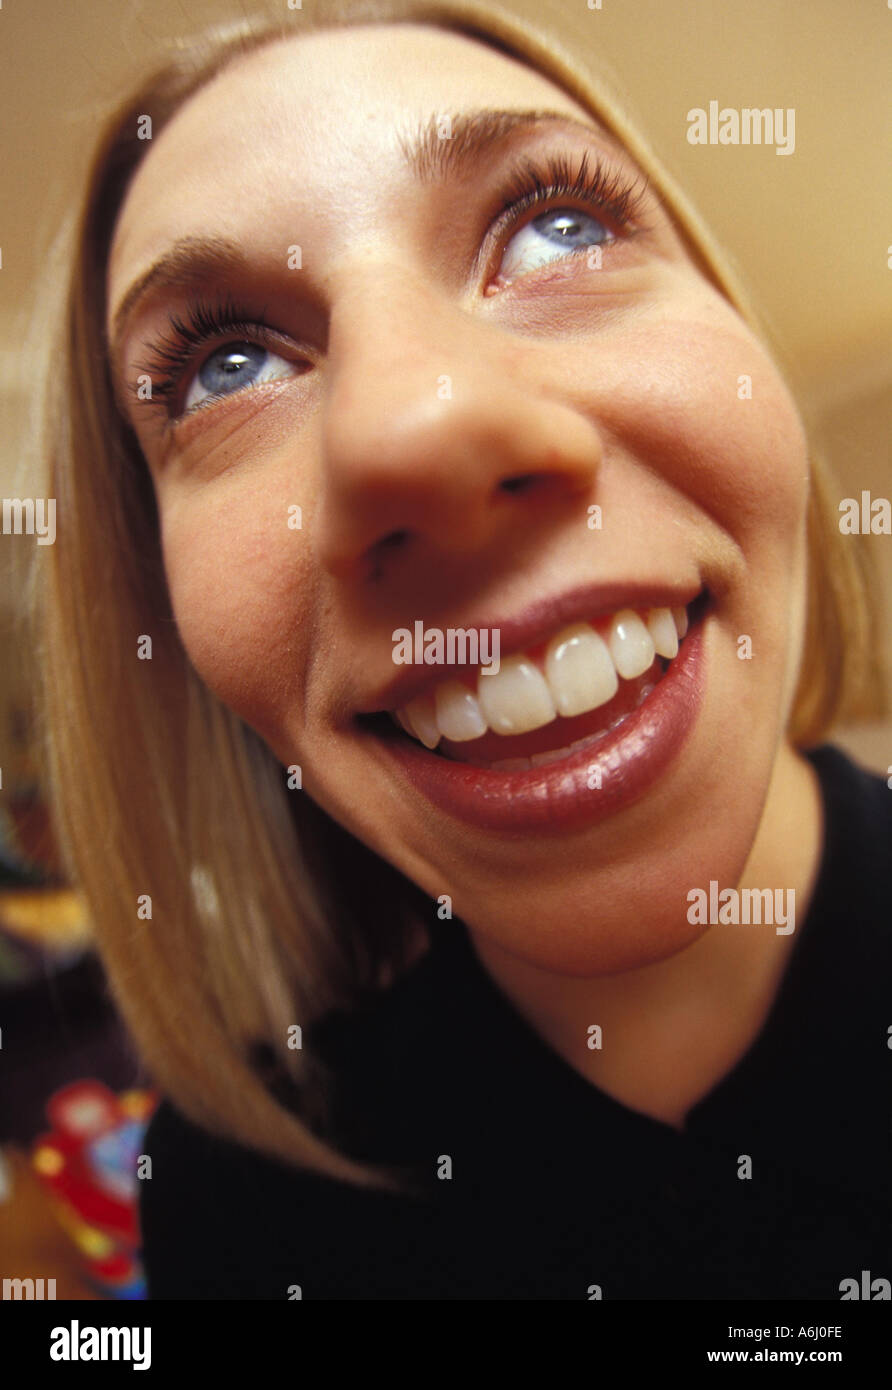 Woman Making Goofy Face Stock Photo